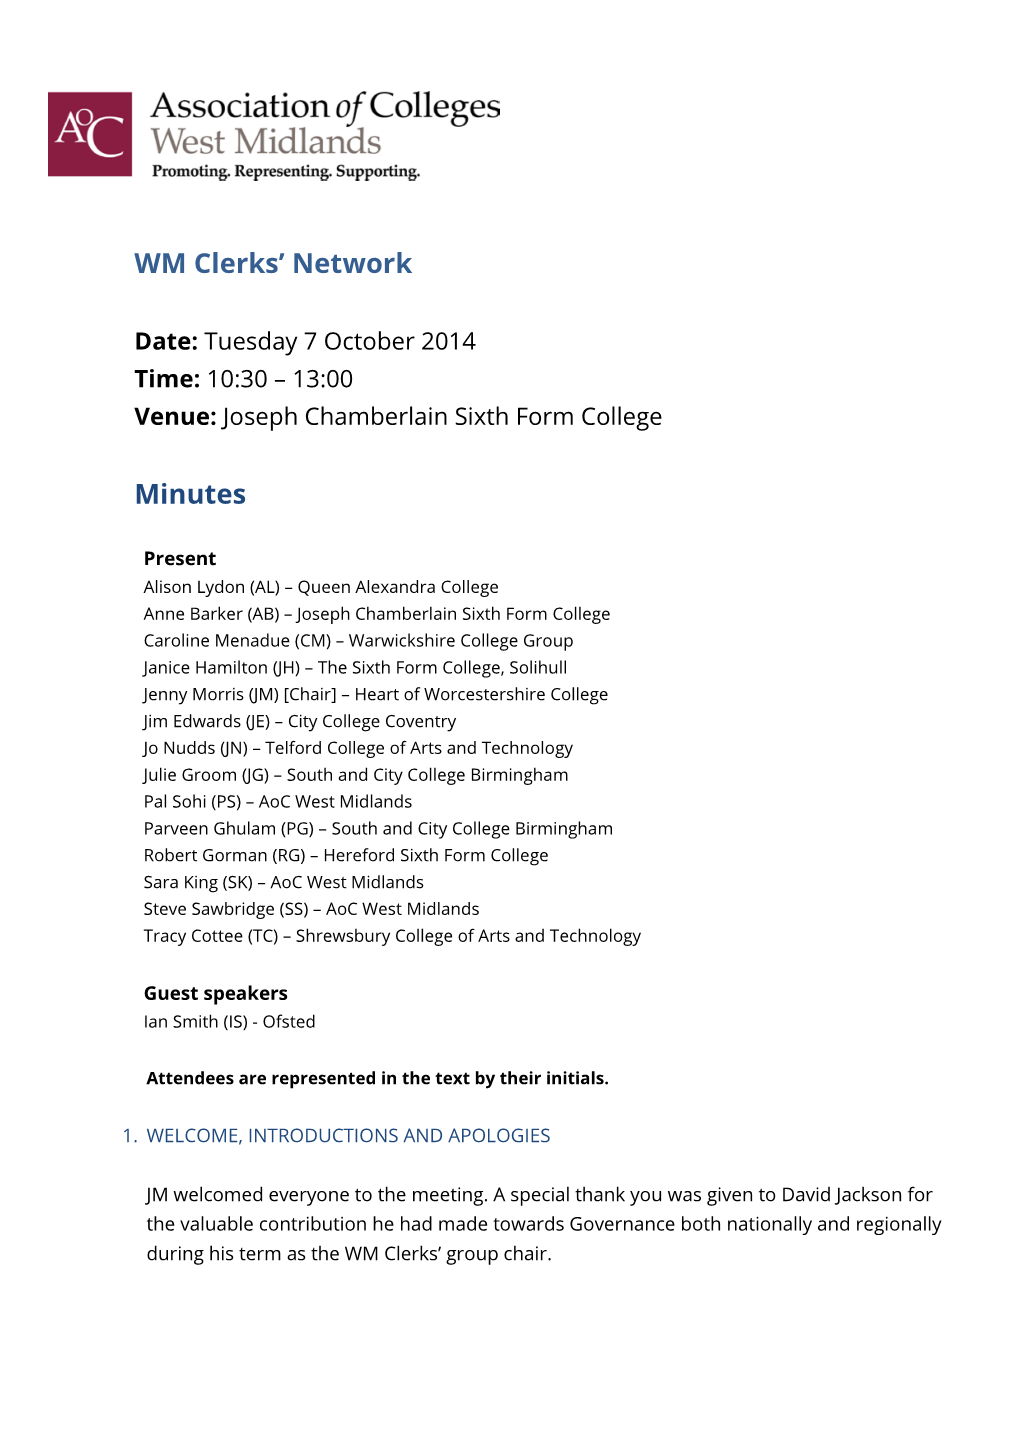 WM Clerks' Network Minutes